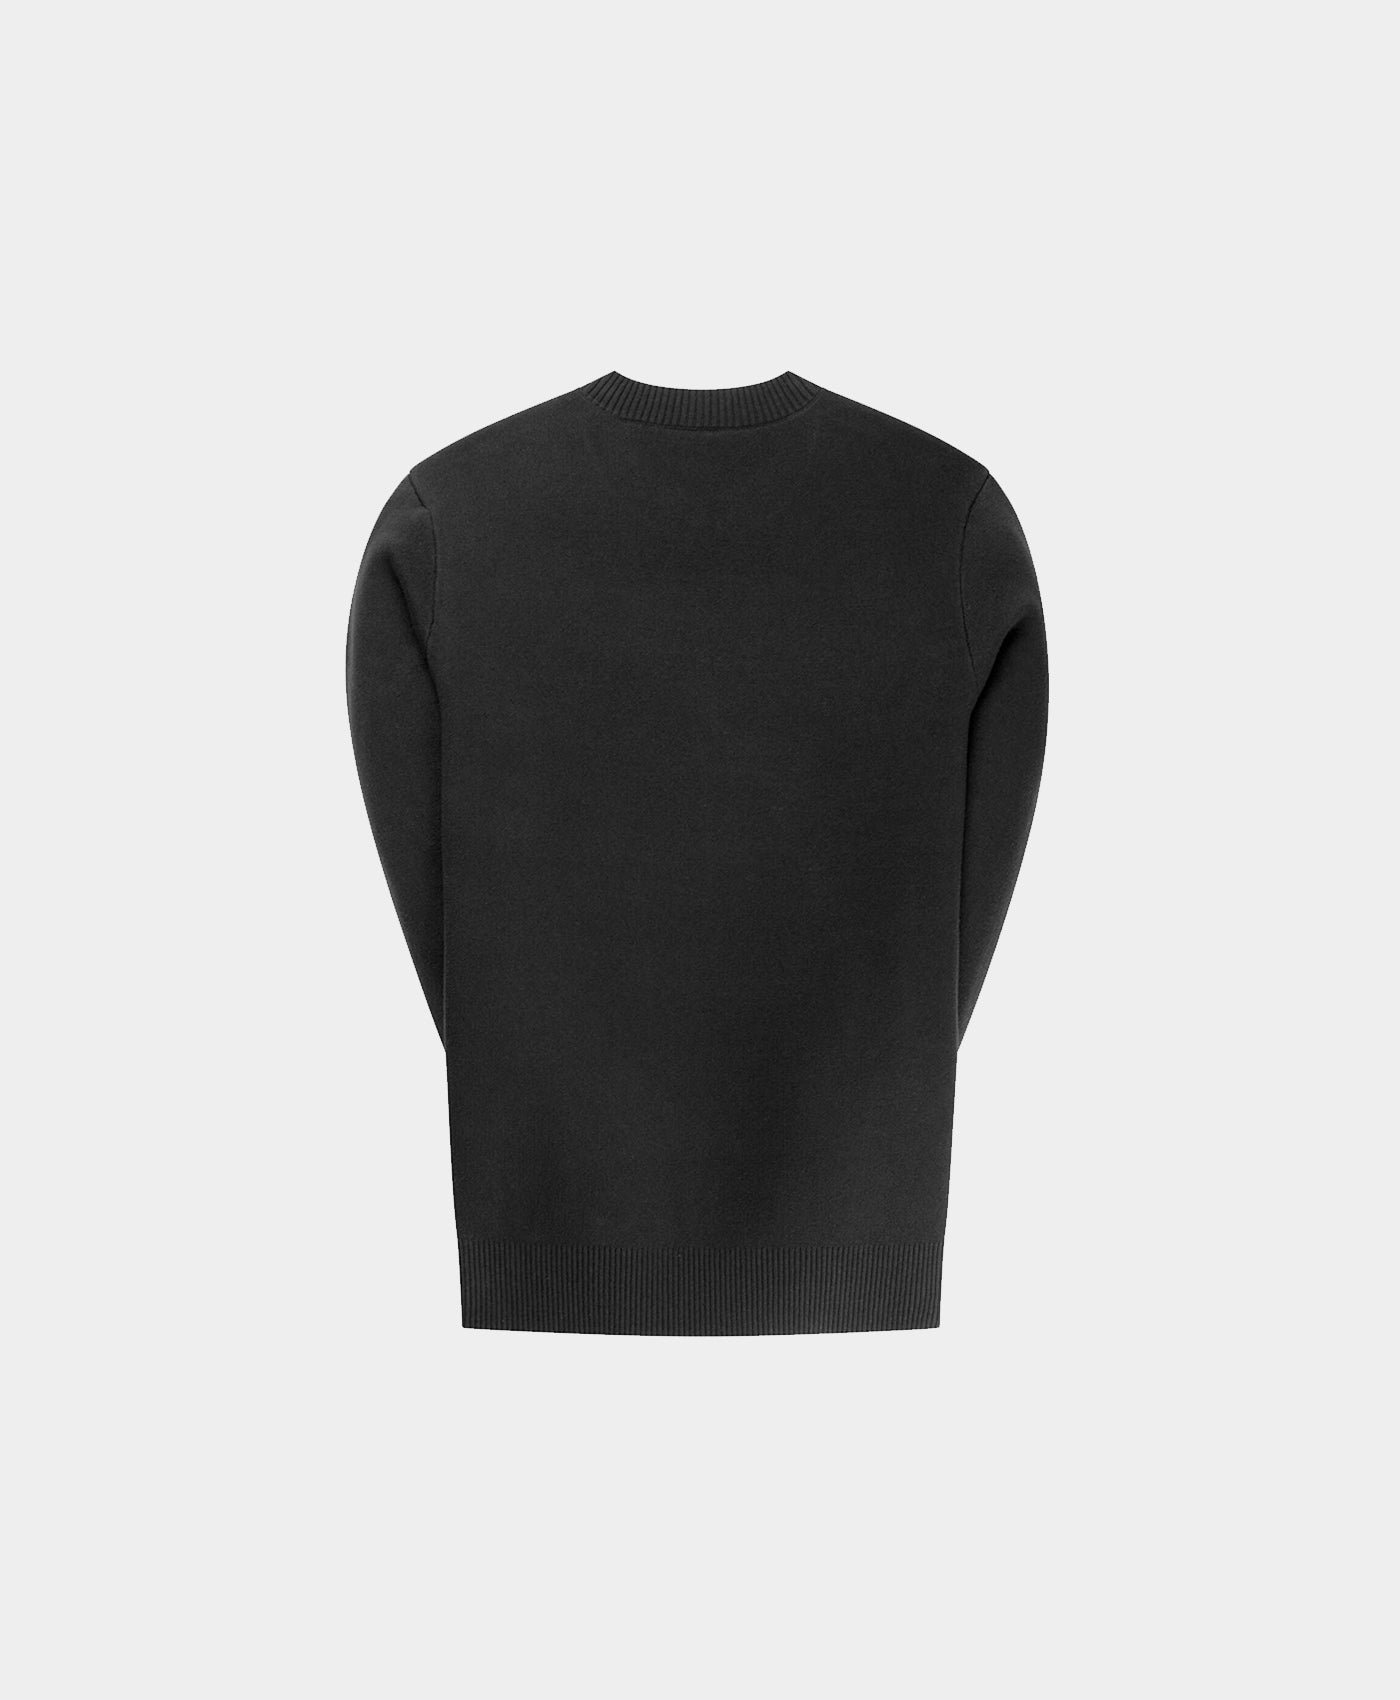 DP - Black Etype Knit Sweater - Packshot - Rear